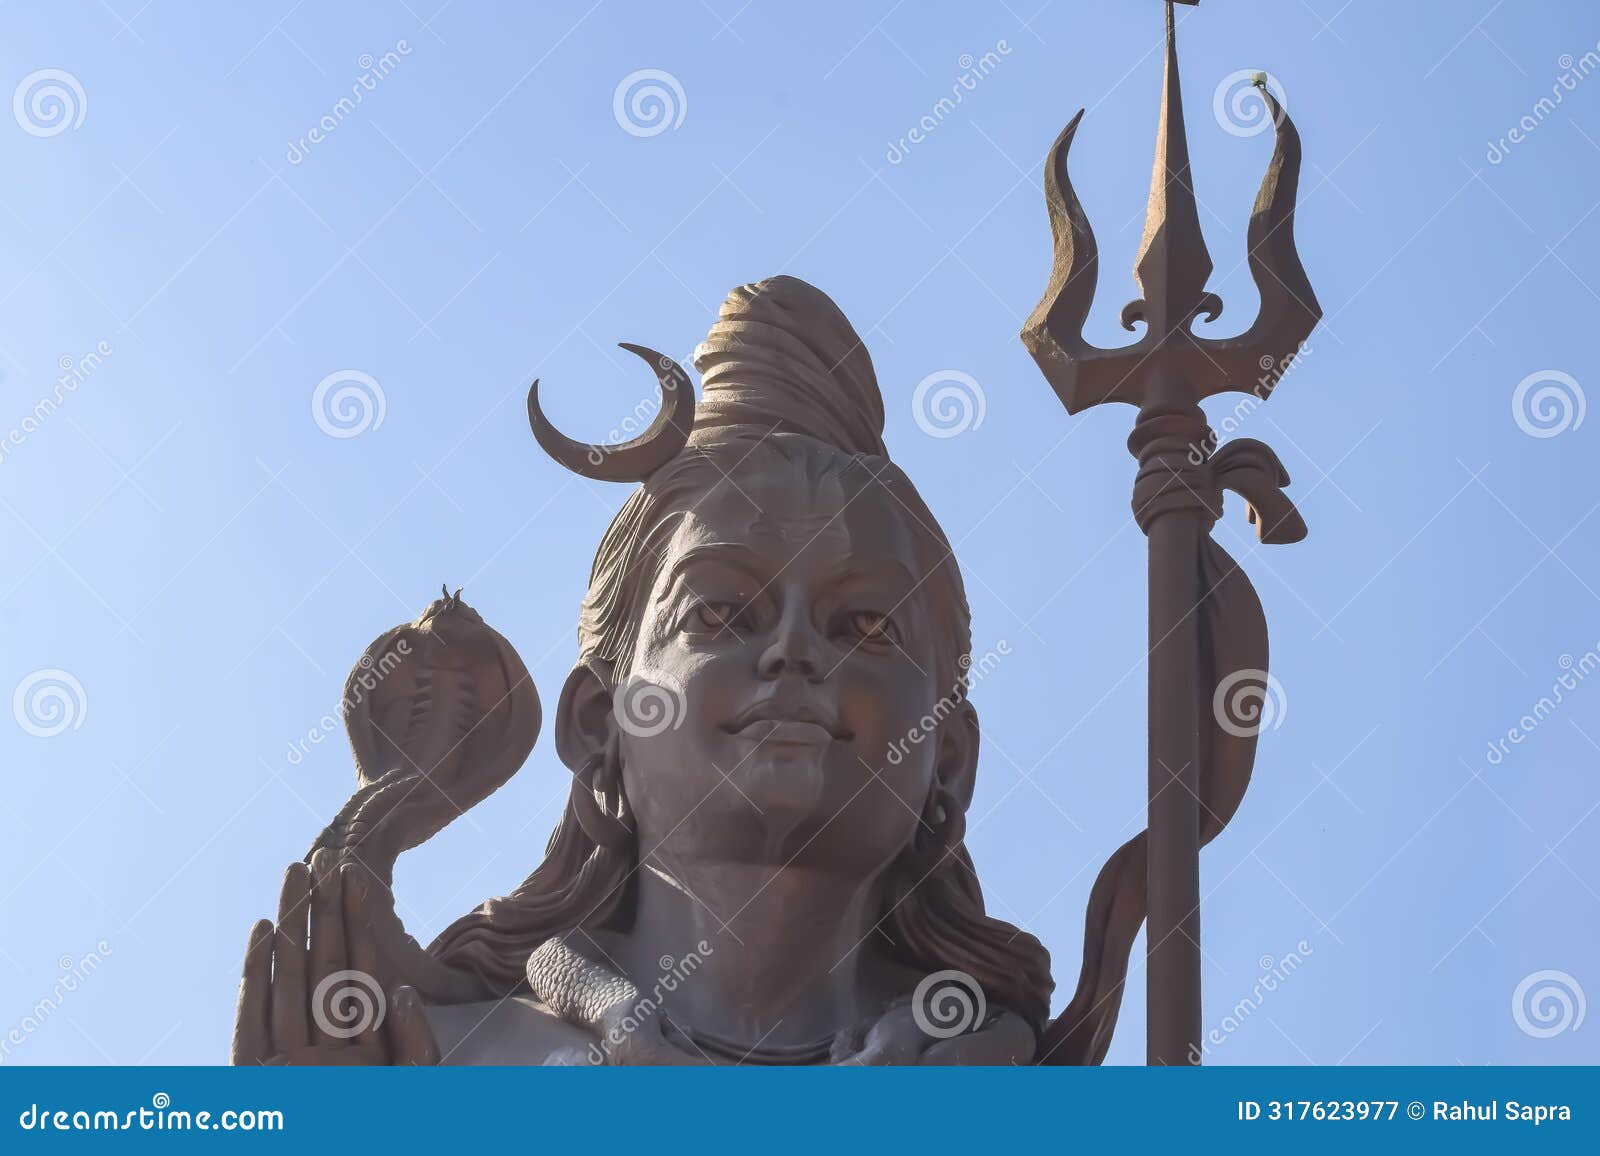 big statue of lord shiva near delhi international airport, delhi, india, lord shiv big statue touching sky at main highway